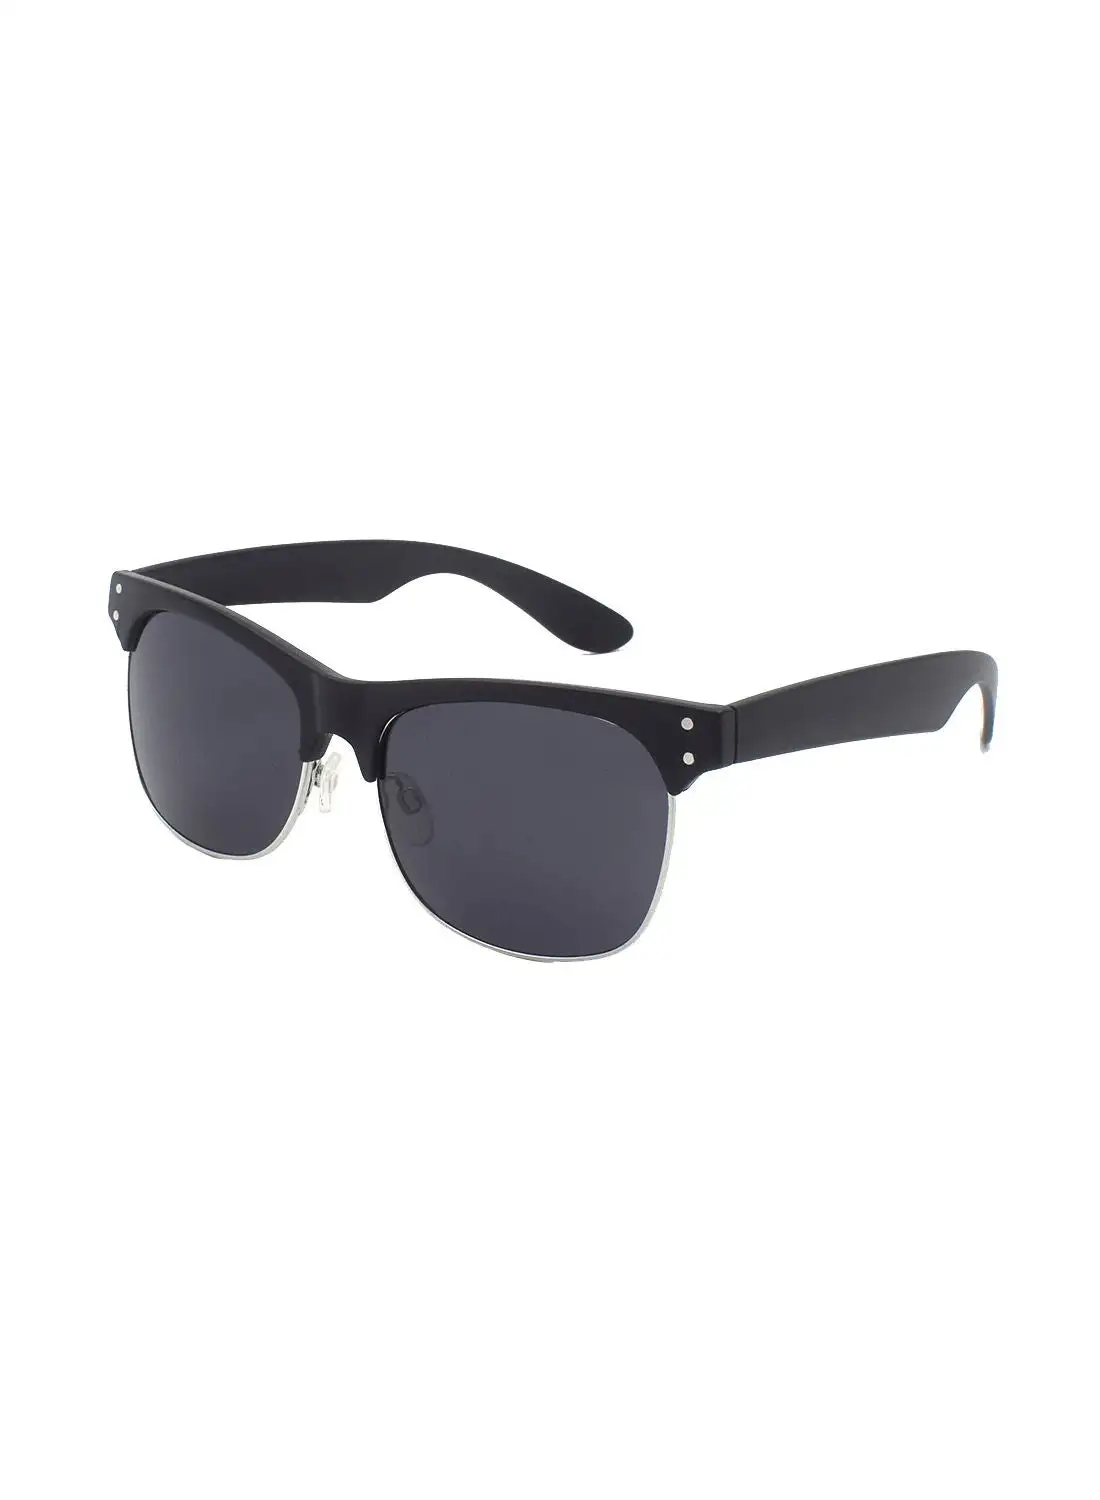 MADEYES Rectangular Sunglasses EE20X088